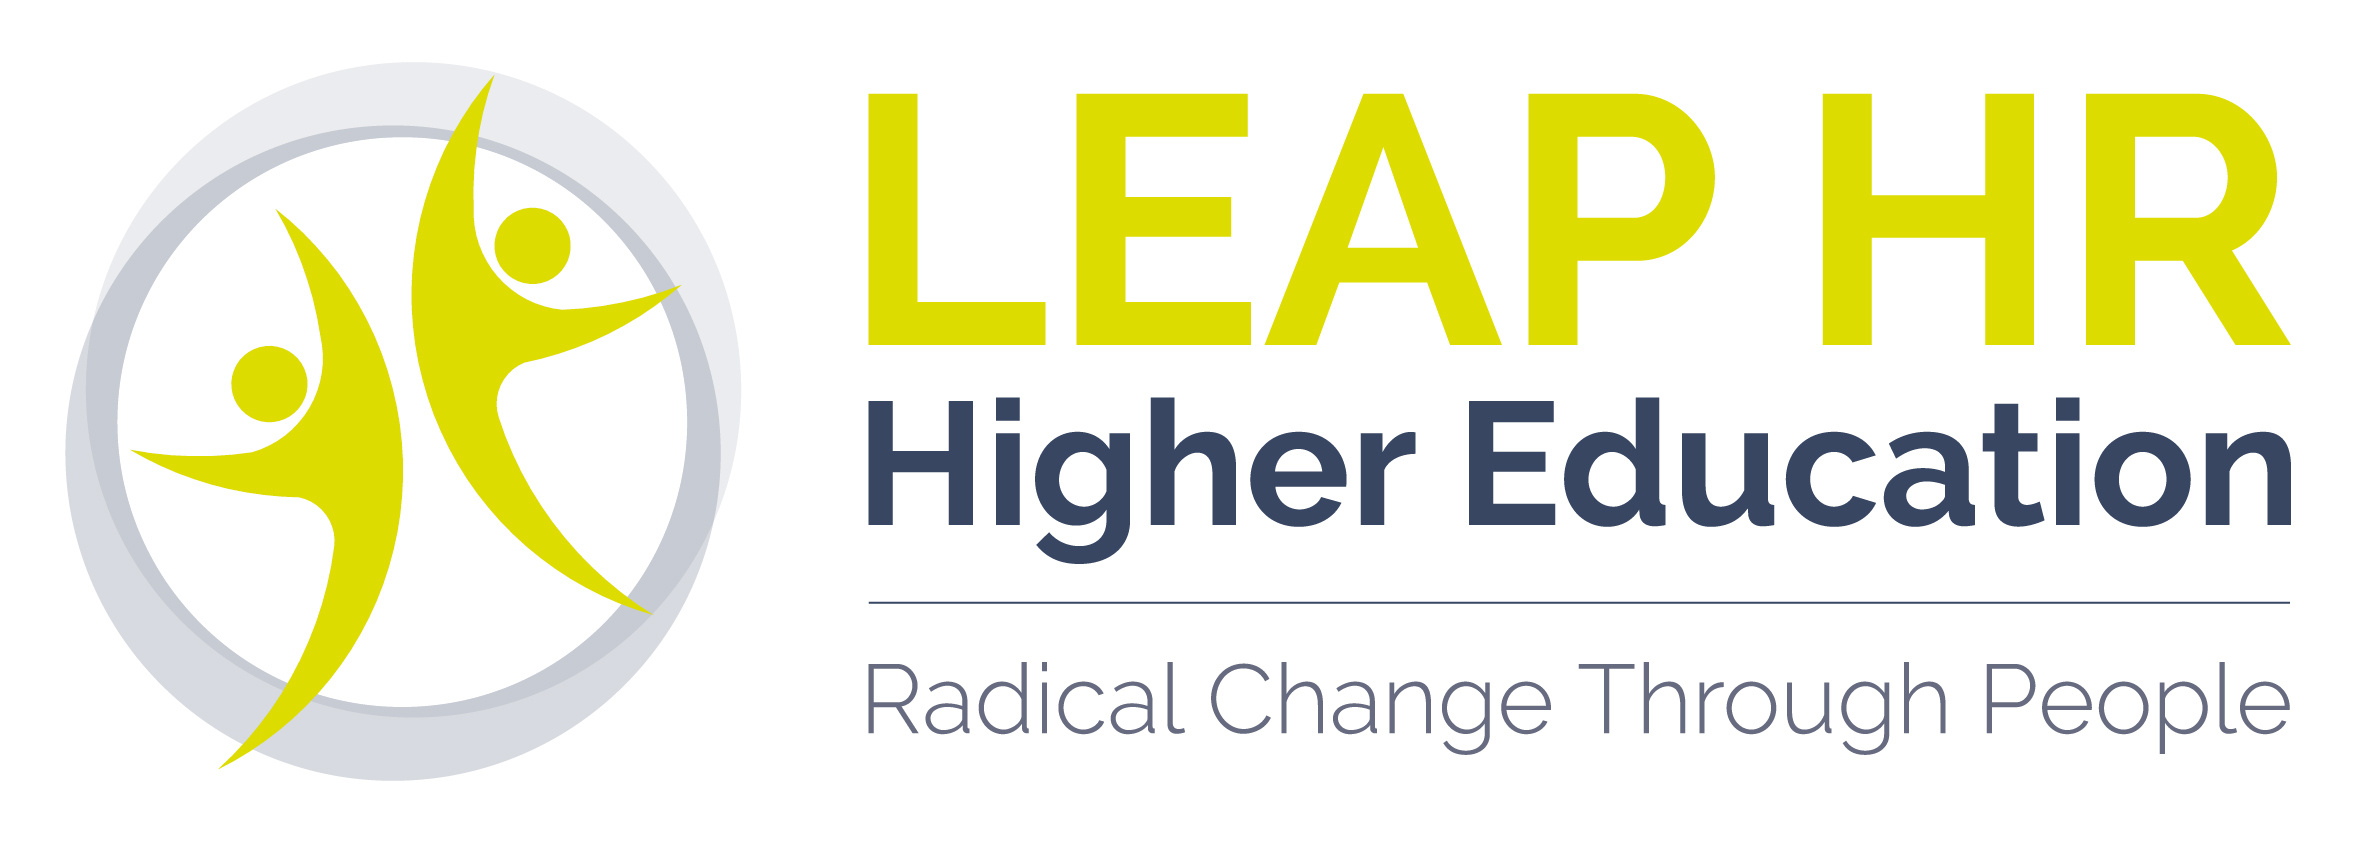 Hanson Wade - LEAP HR Higher Education Logo - AW